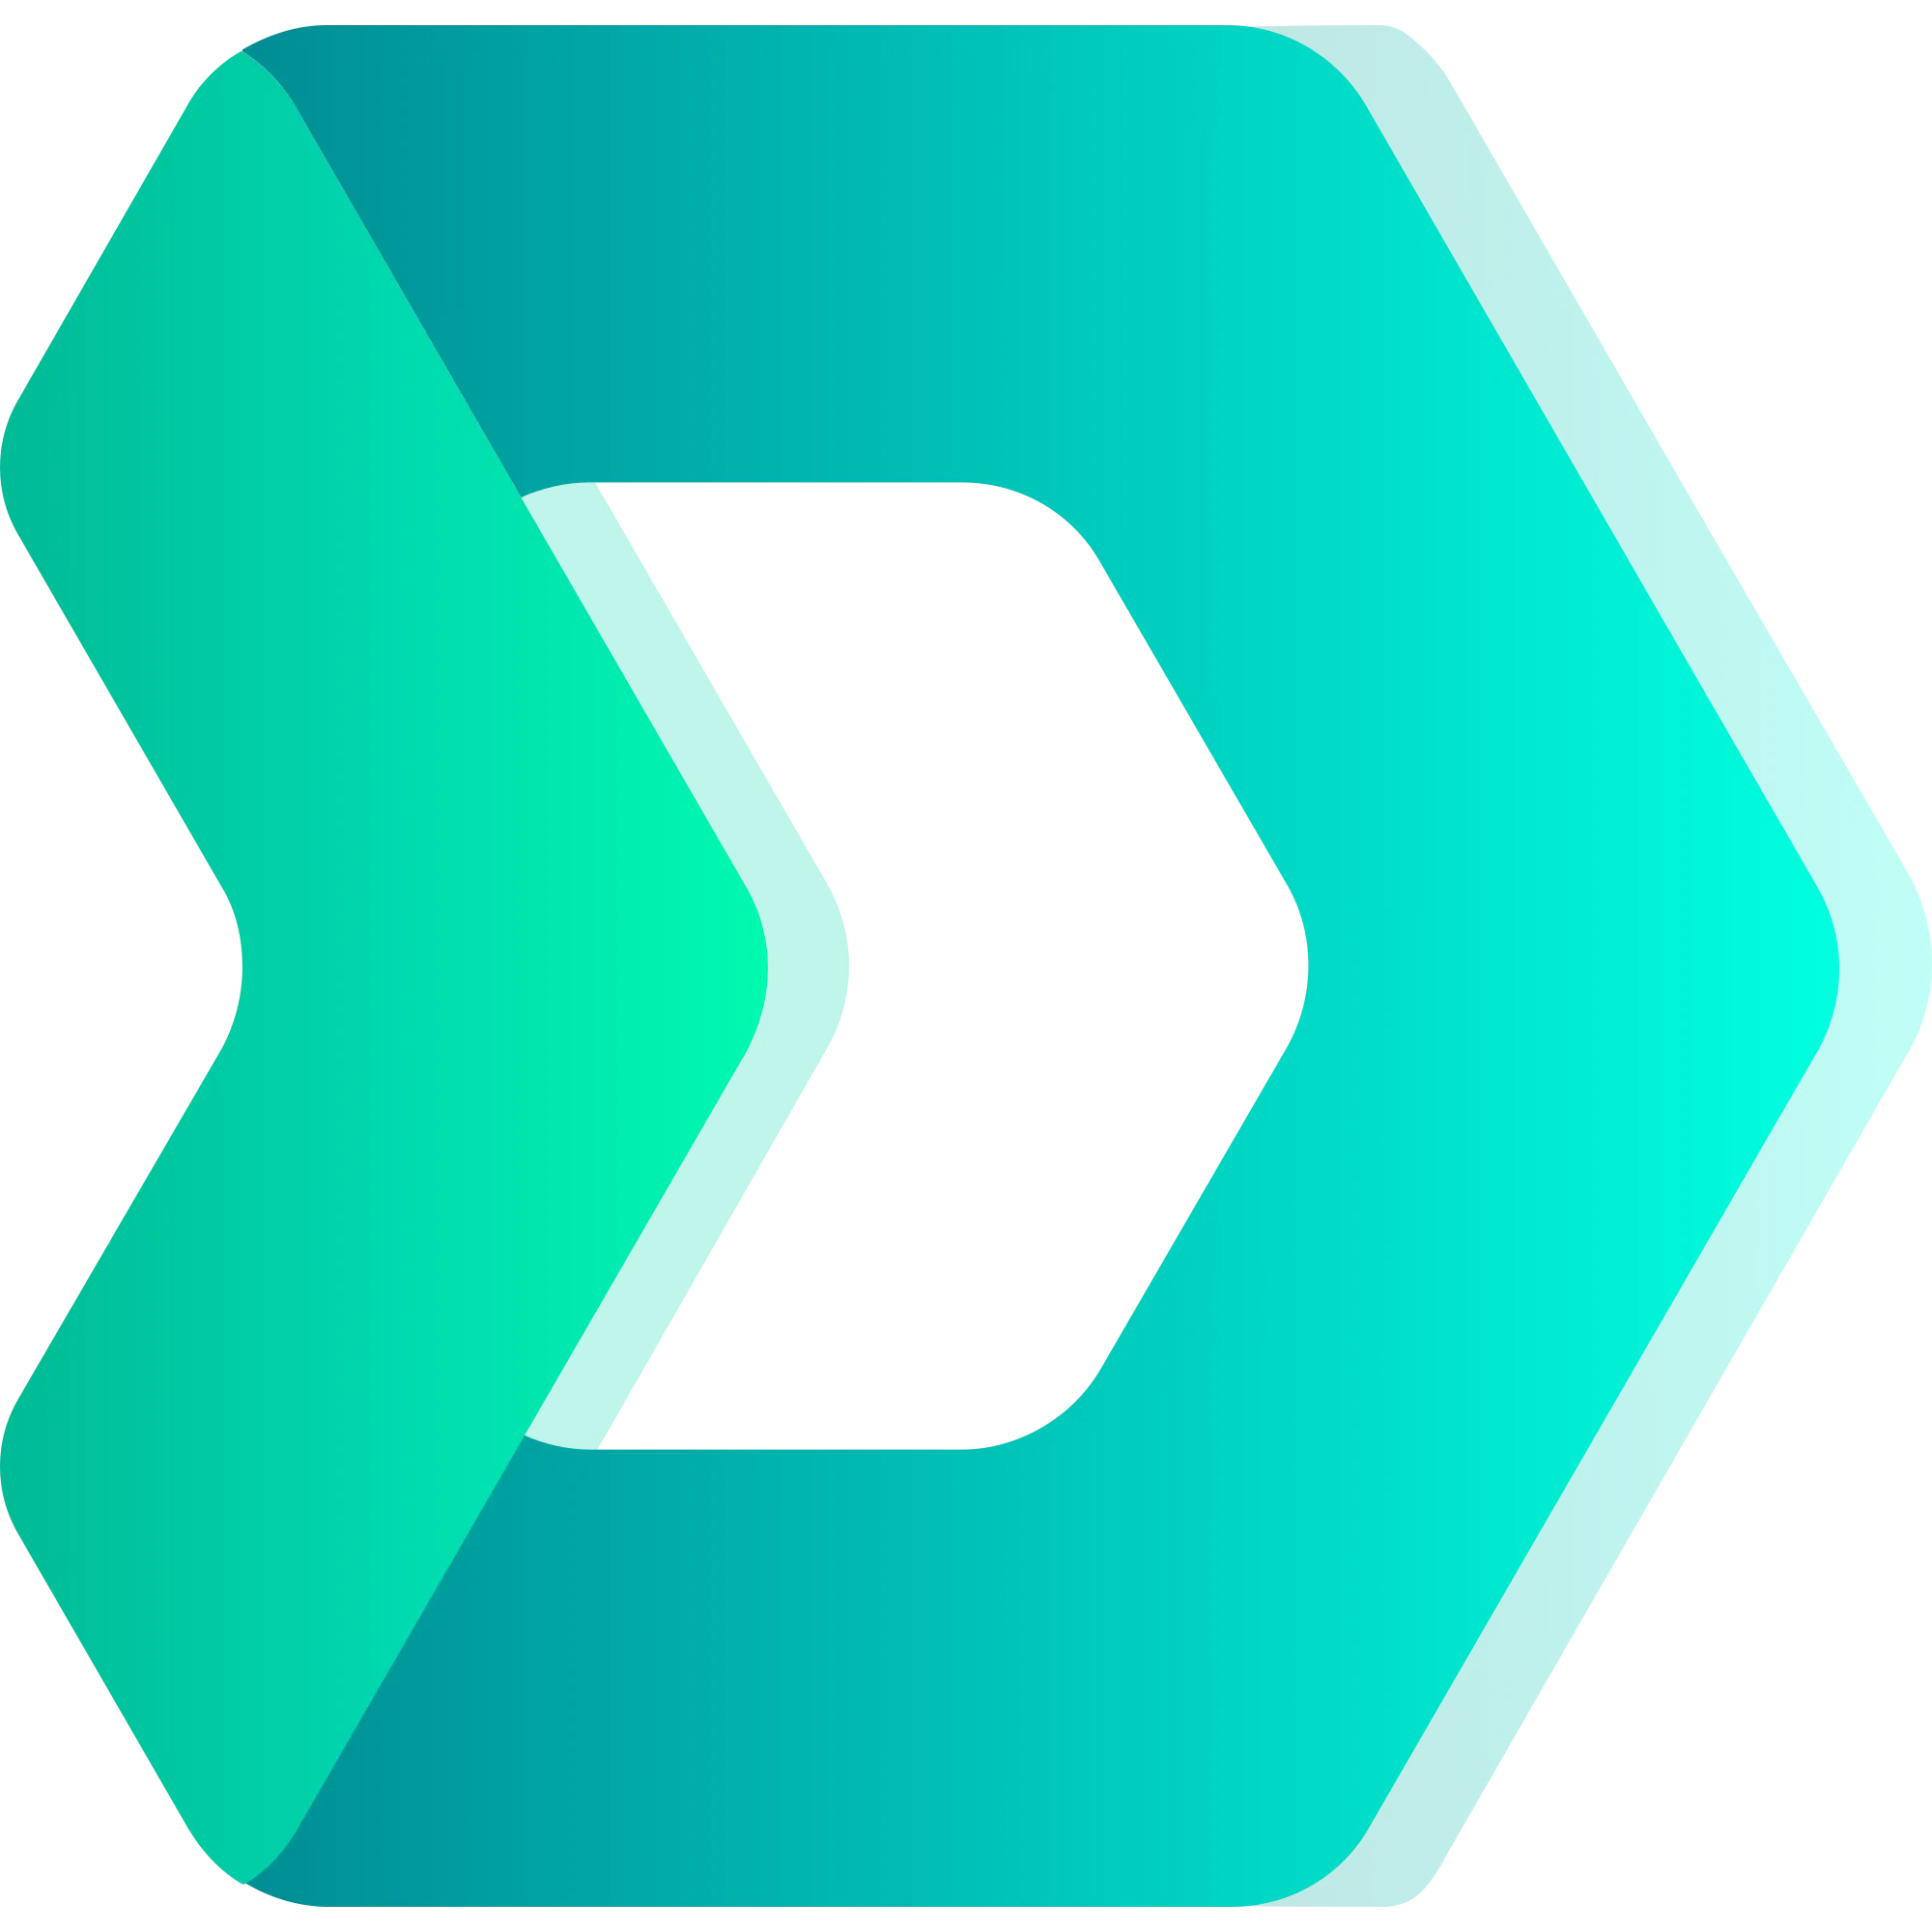 DMarket (DMT) logo